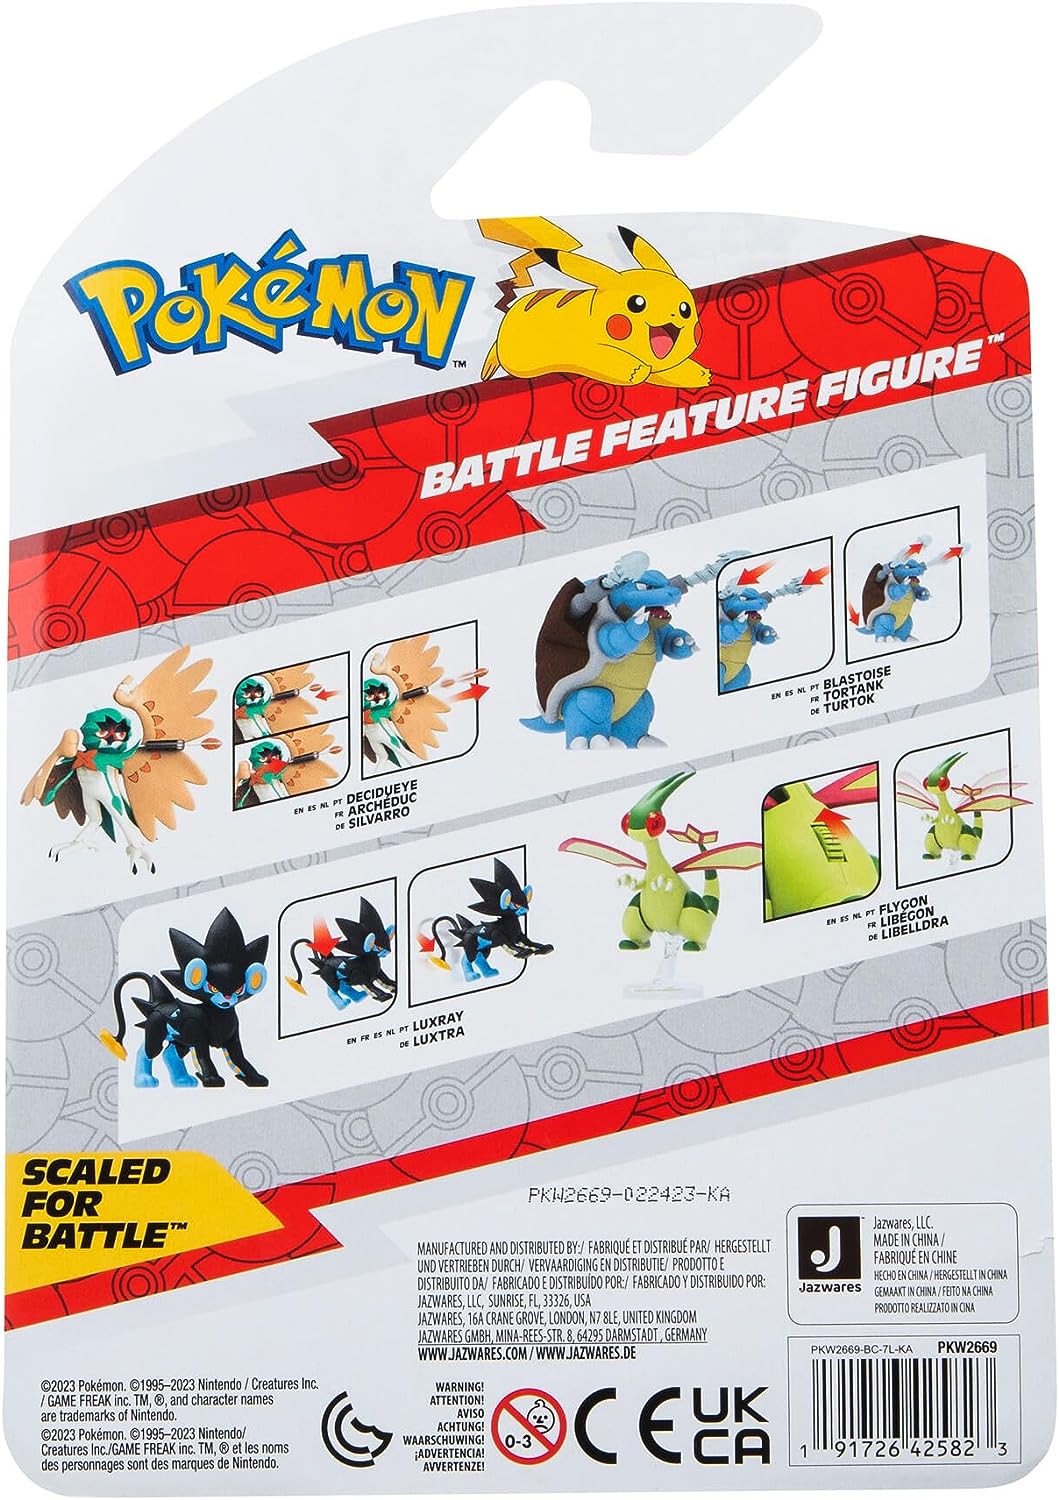 Pokémon Battle Feature Figure – Luxray